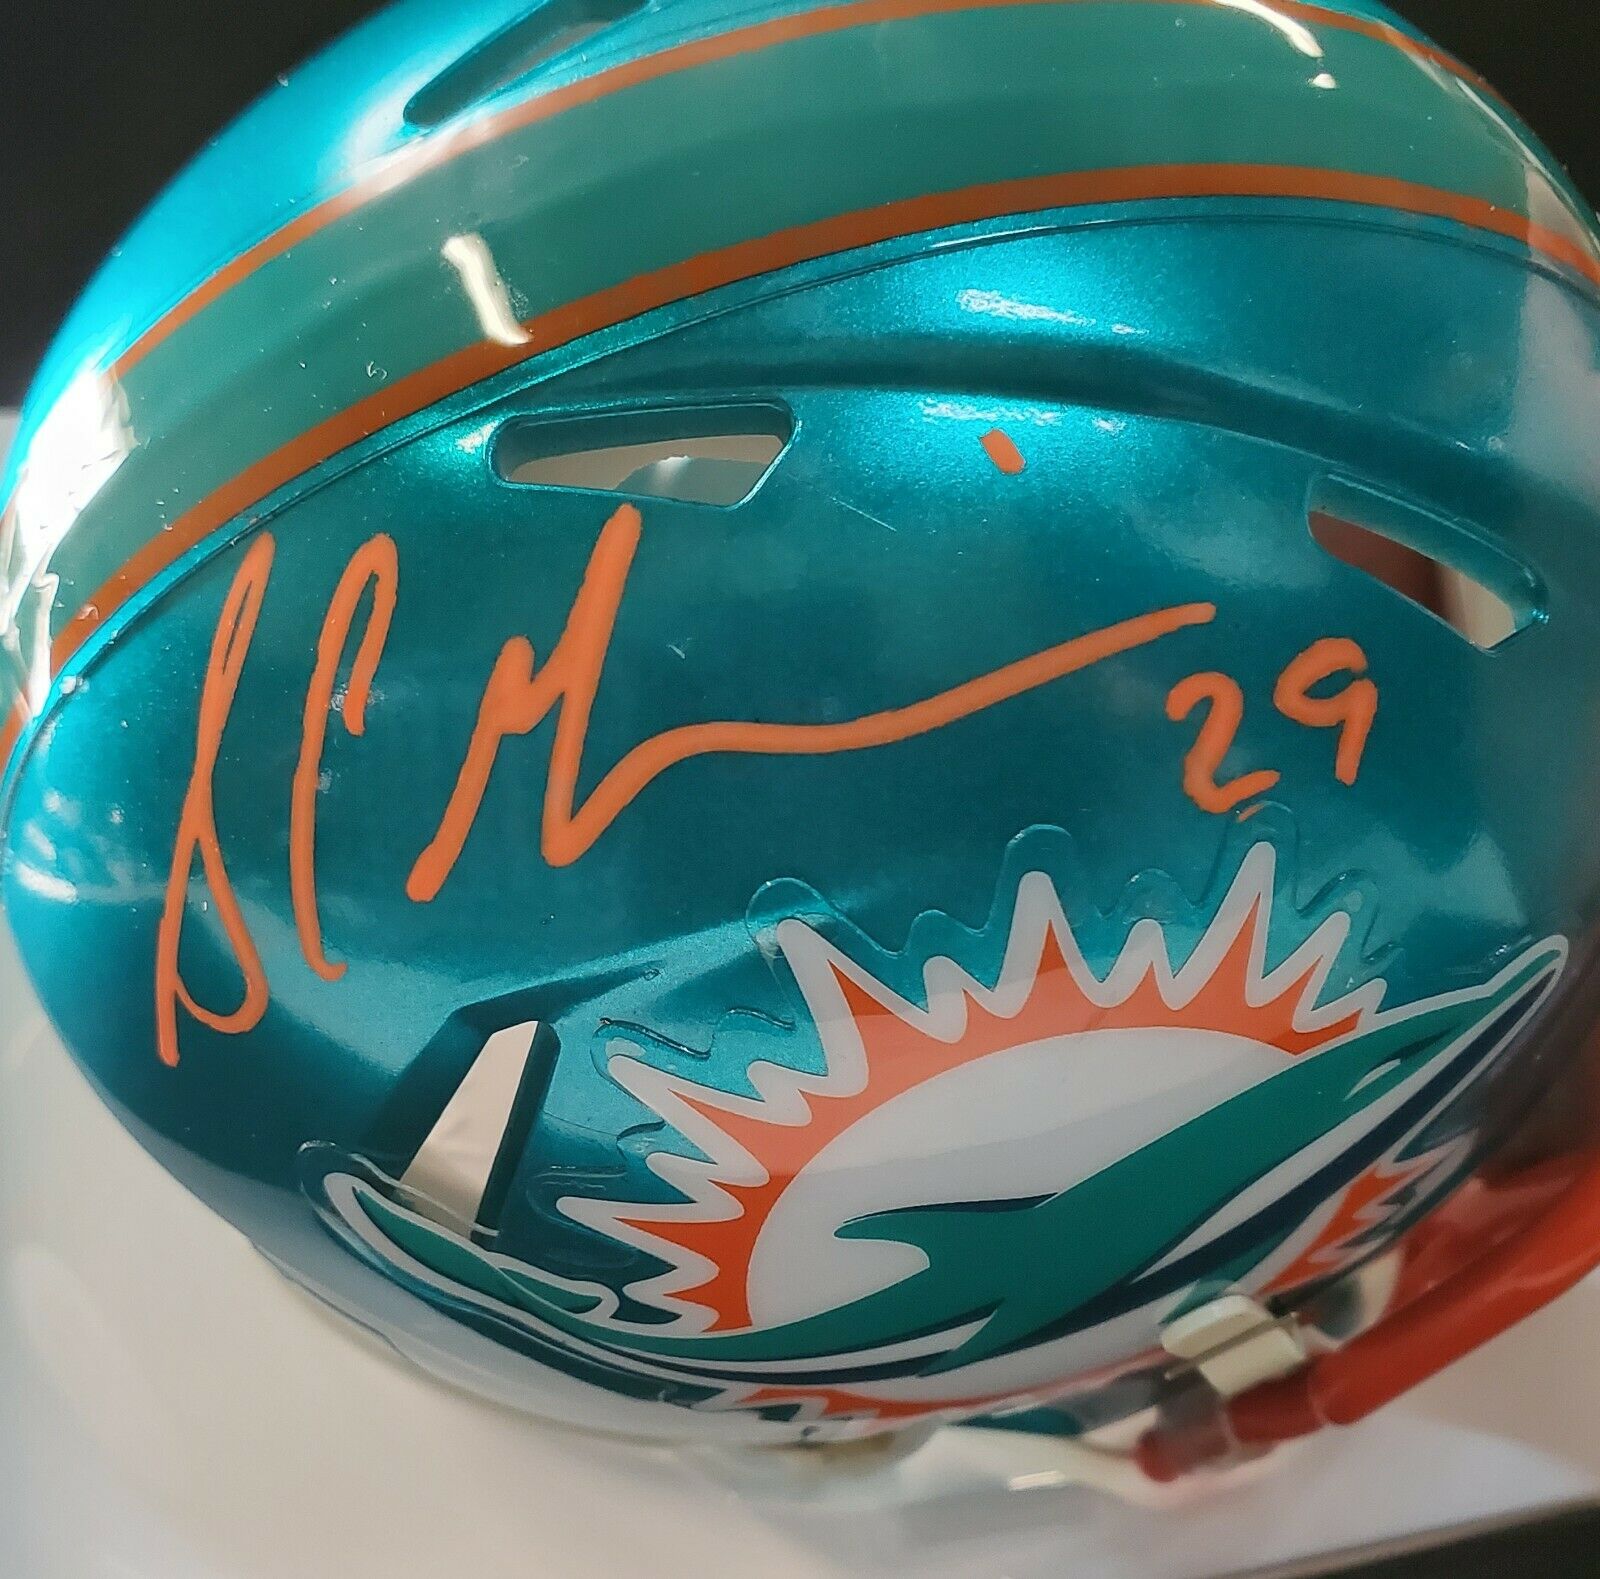 MVP Authentics Miami Dolphins Sam Madison Autographed Signed Flash Mini Helmet Jsa Coa 112.50 sports jersey framing , jersey framing